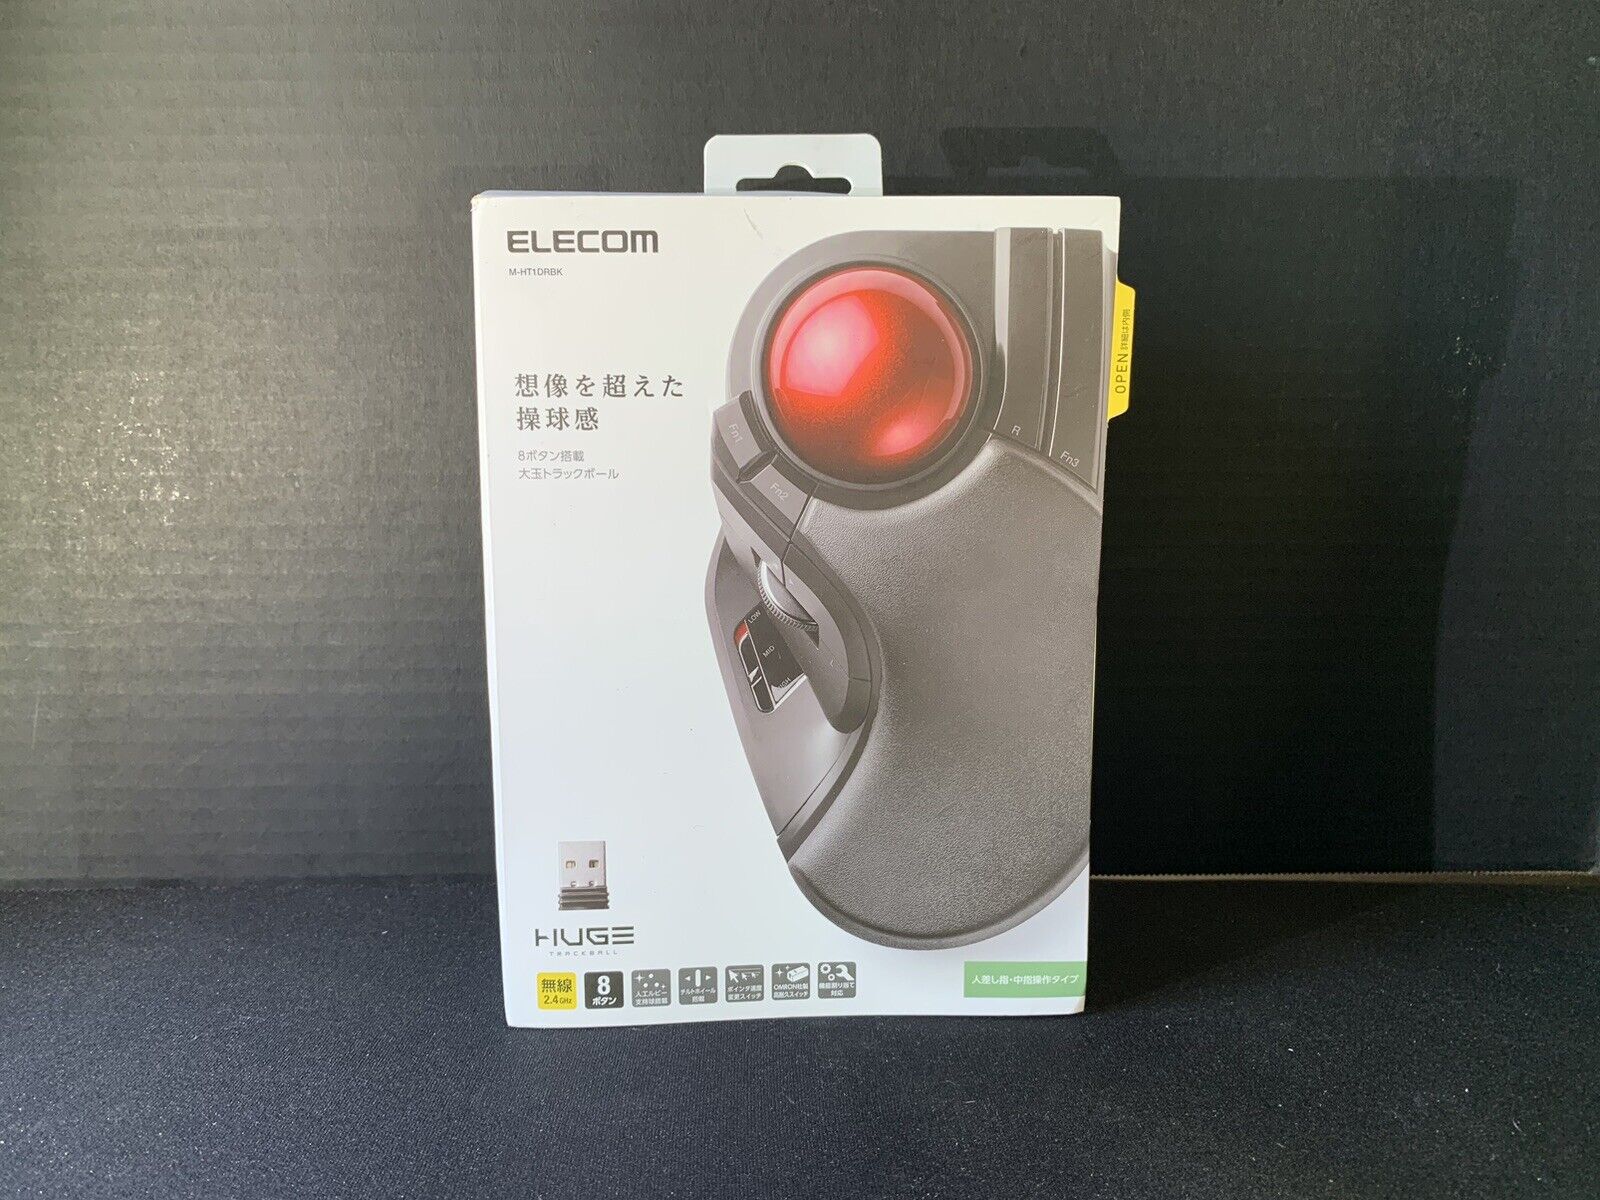 ELECOM HUGE Trackball Mouse, 2.4GHz Wireless, Finger Control, 8-Button M-HT1DRBK